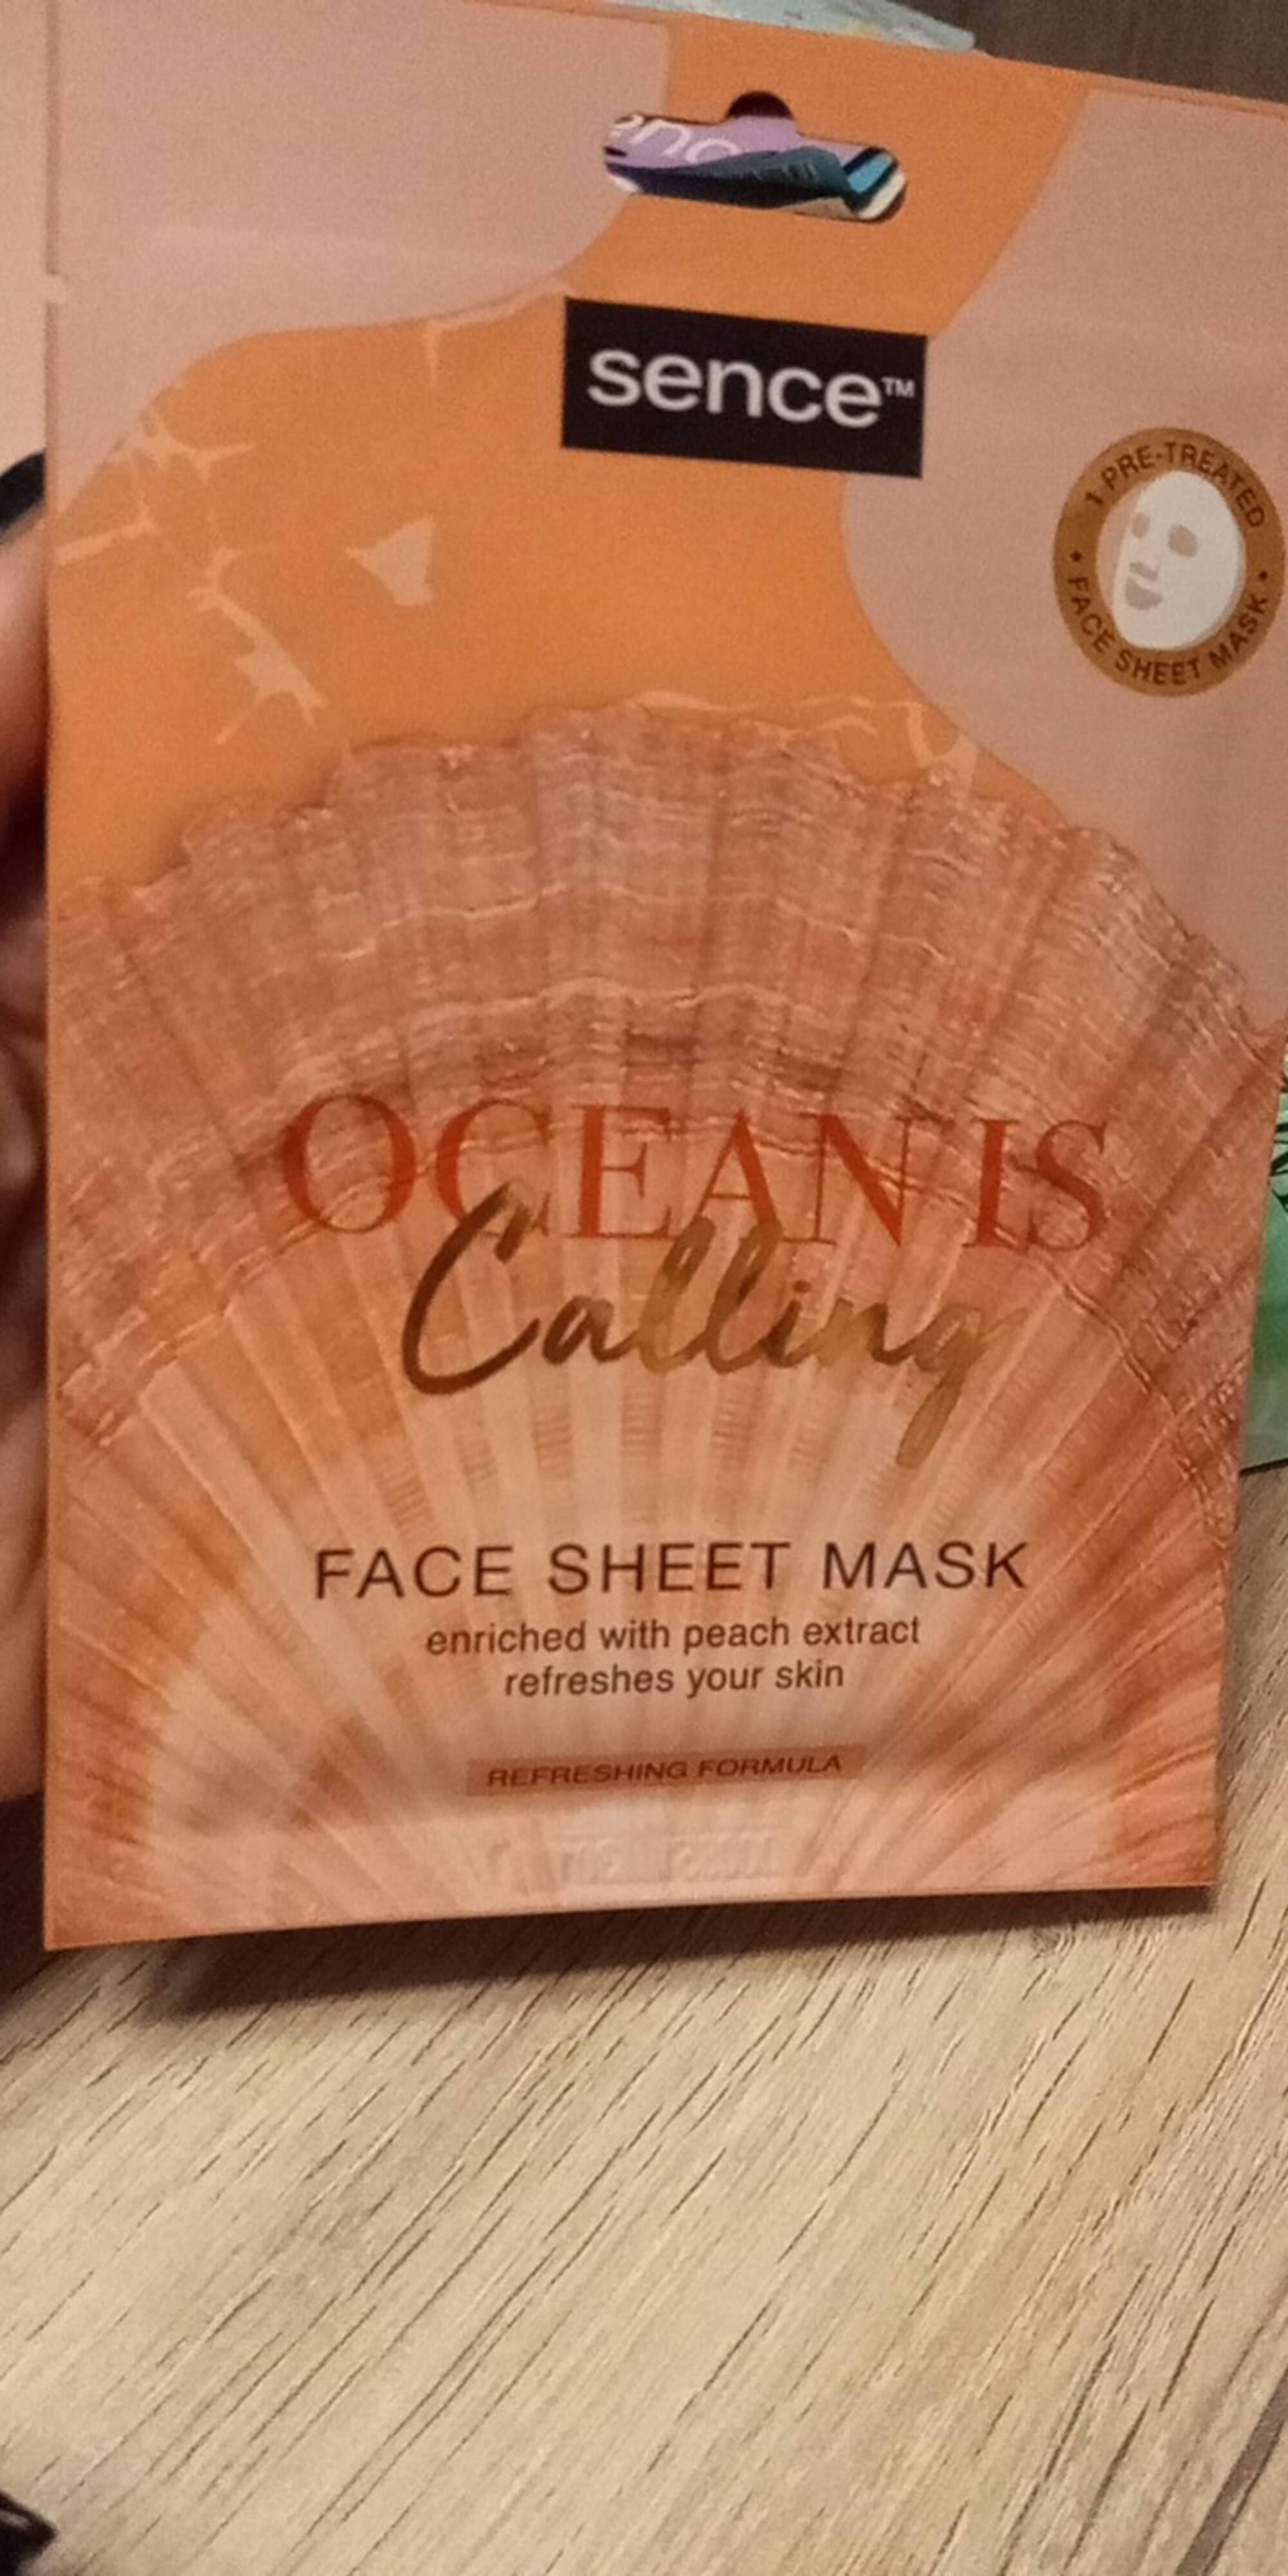 SENCE - Oceans calling - Masque en tissu visage